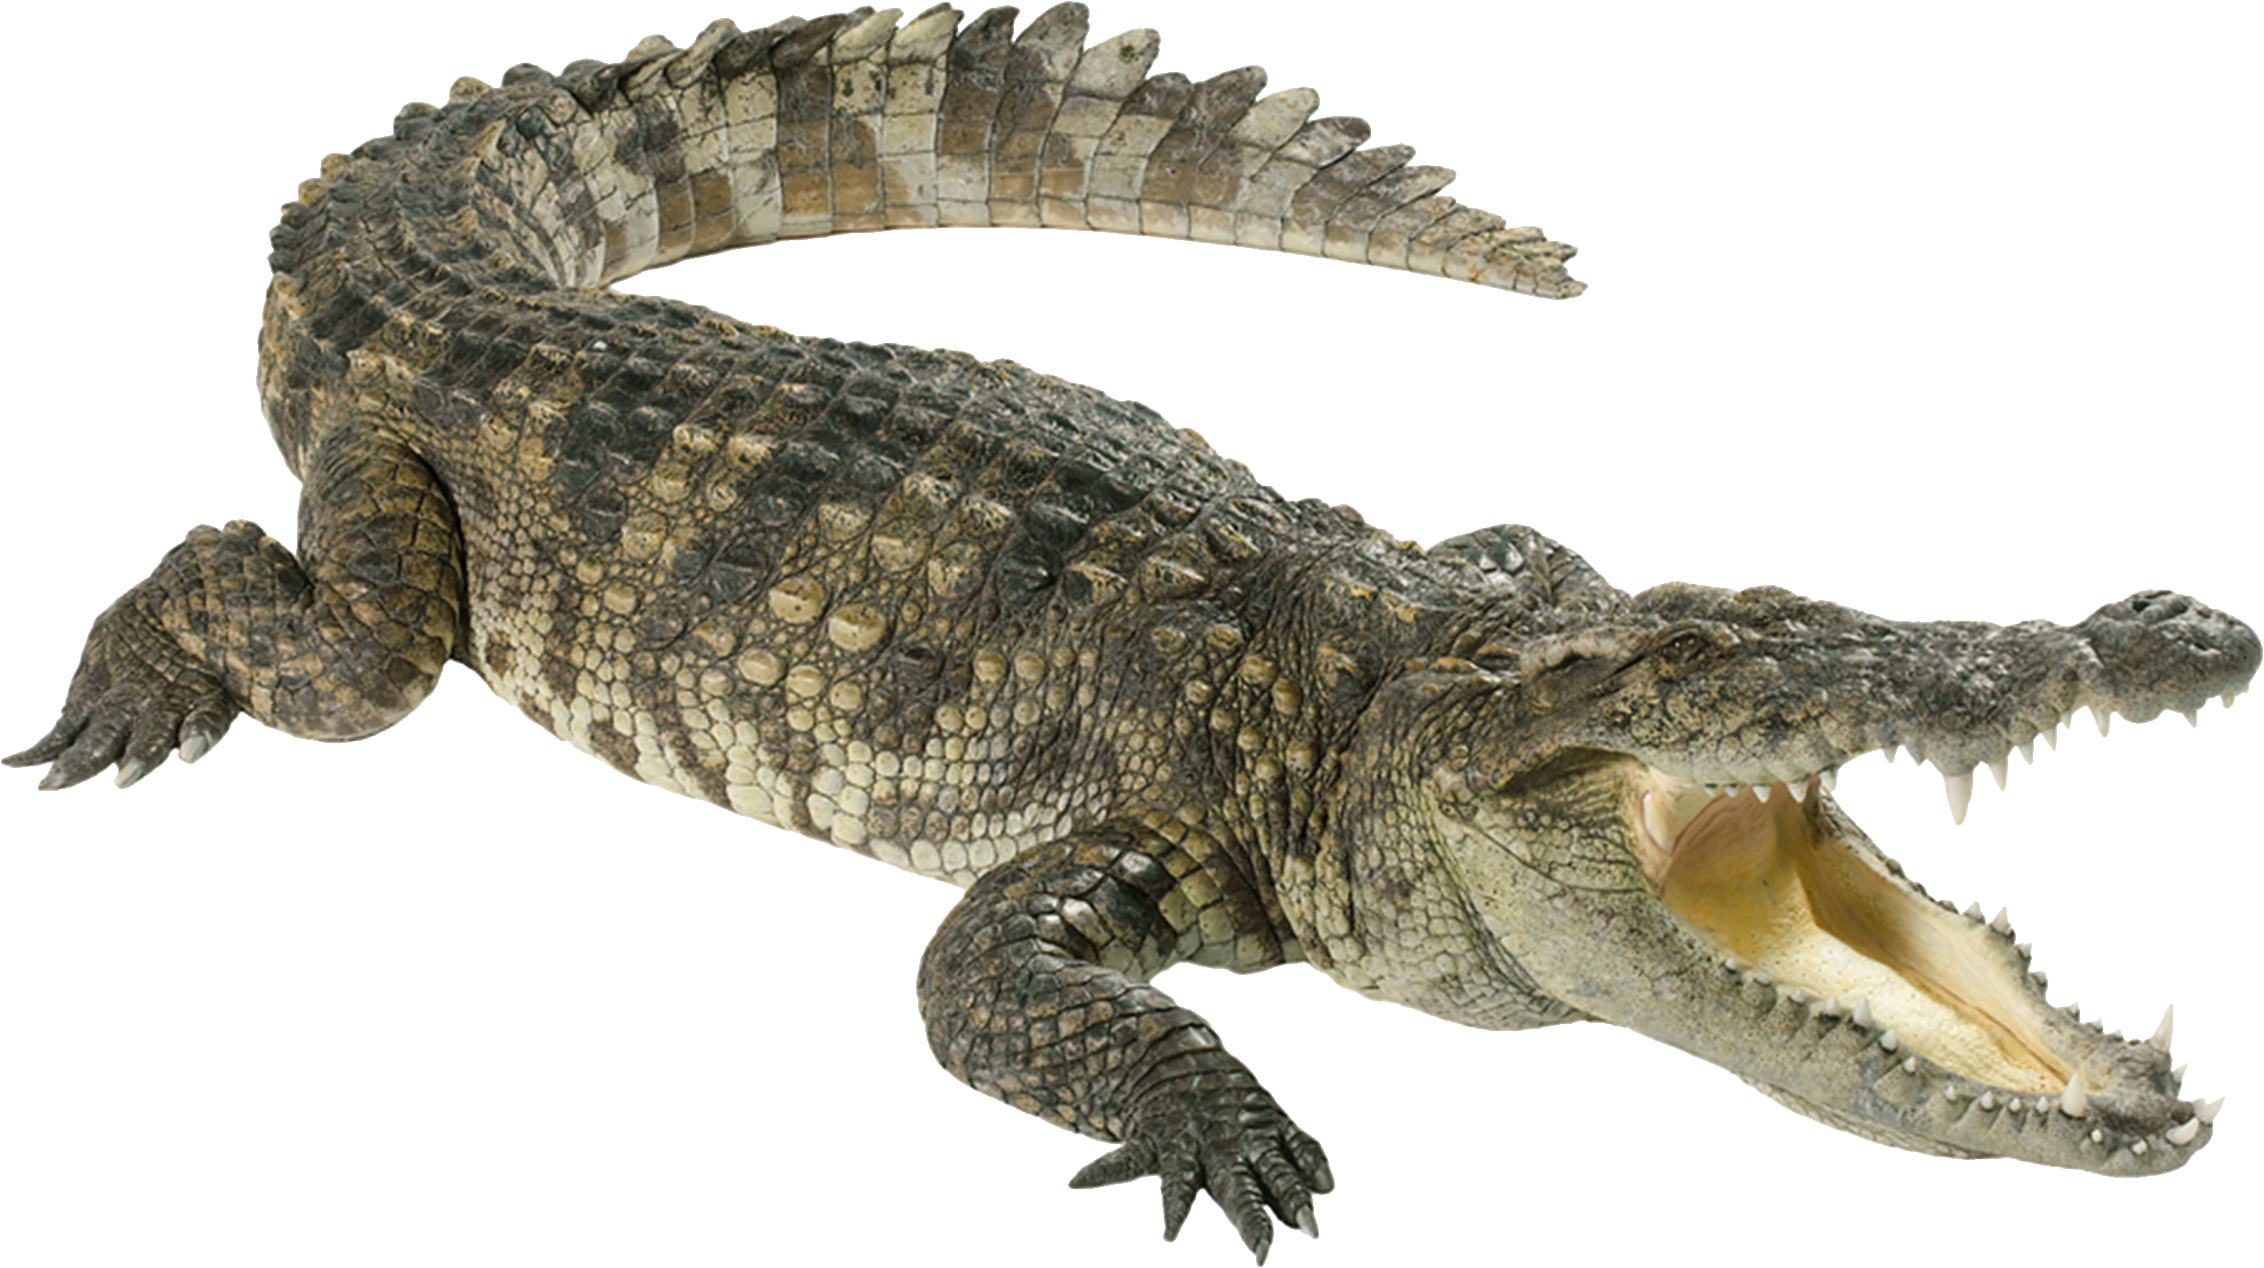 Alligator clipart transparent background. Crocodile png images free